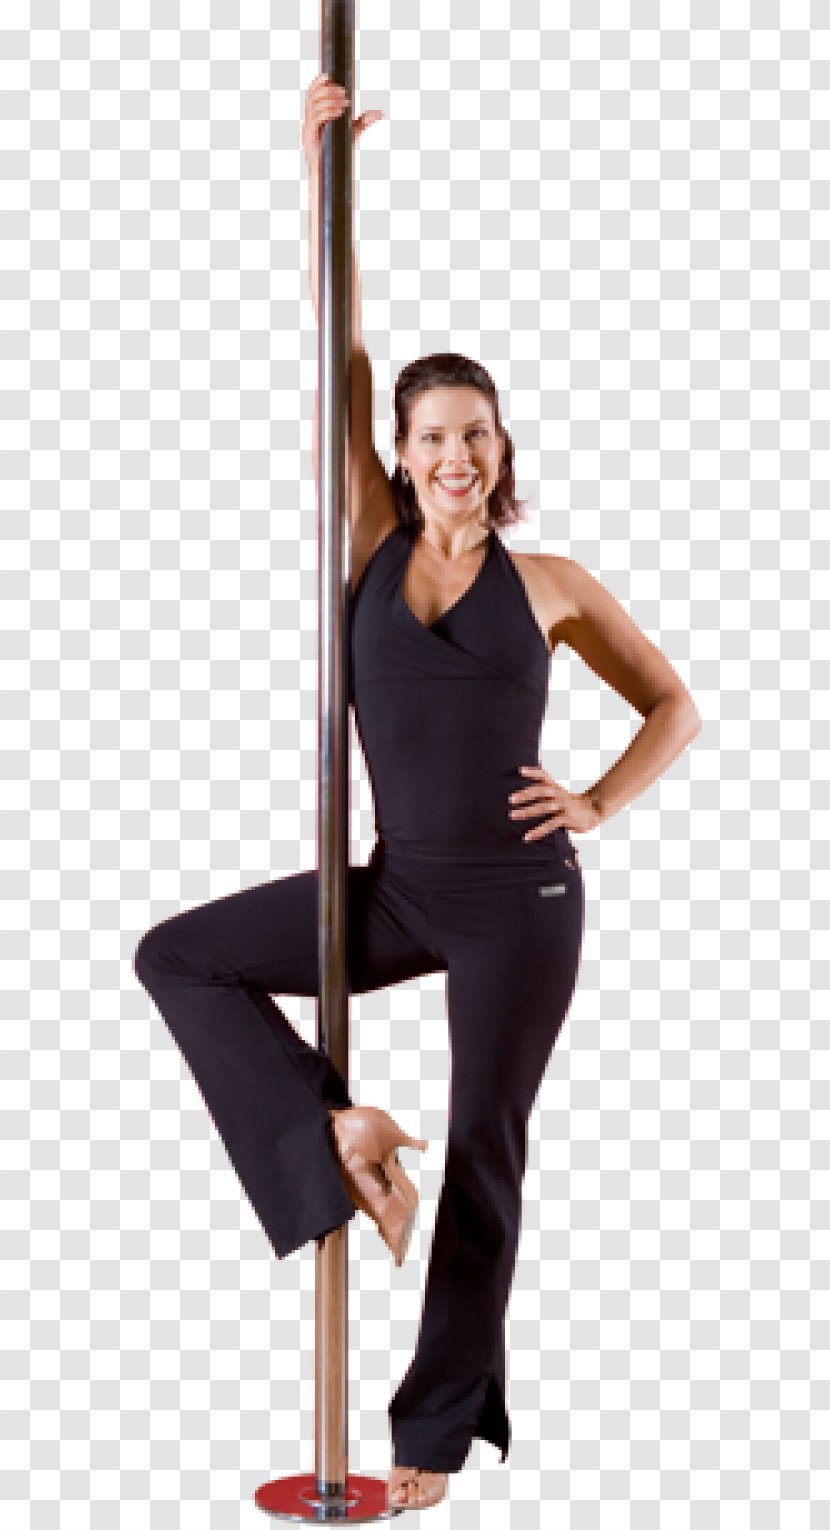 Shoulder Joint - Balance - Pole Dance Transparent PNG